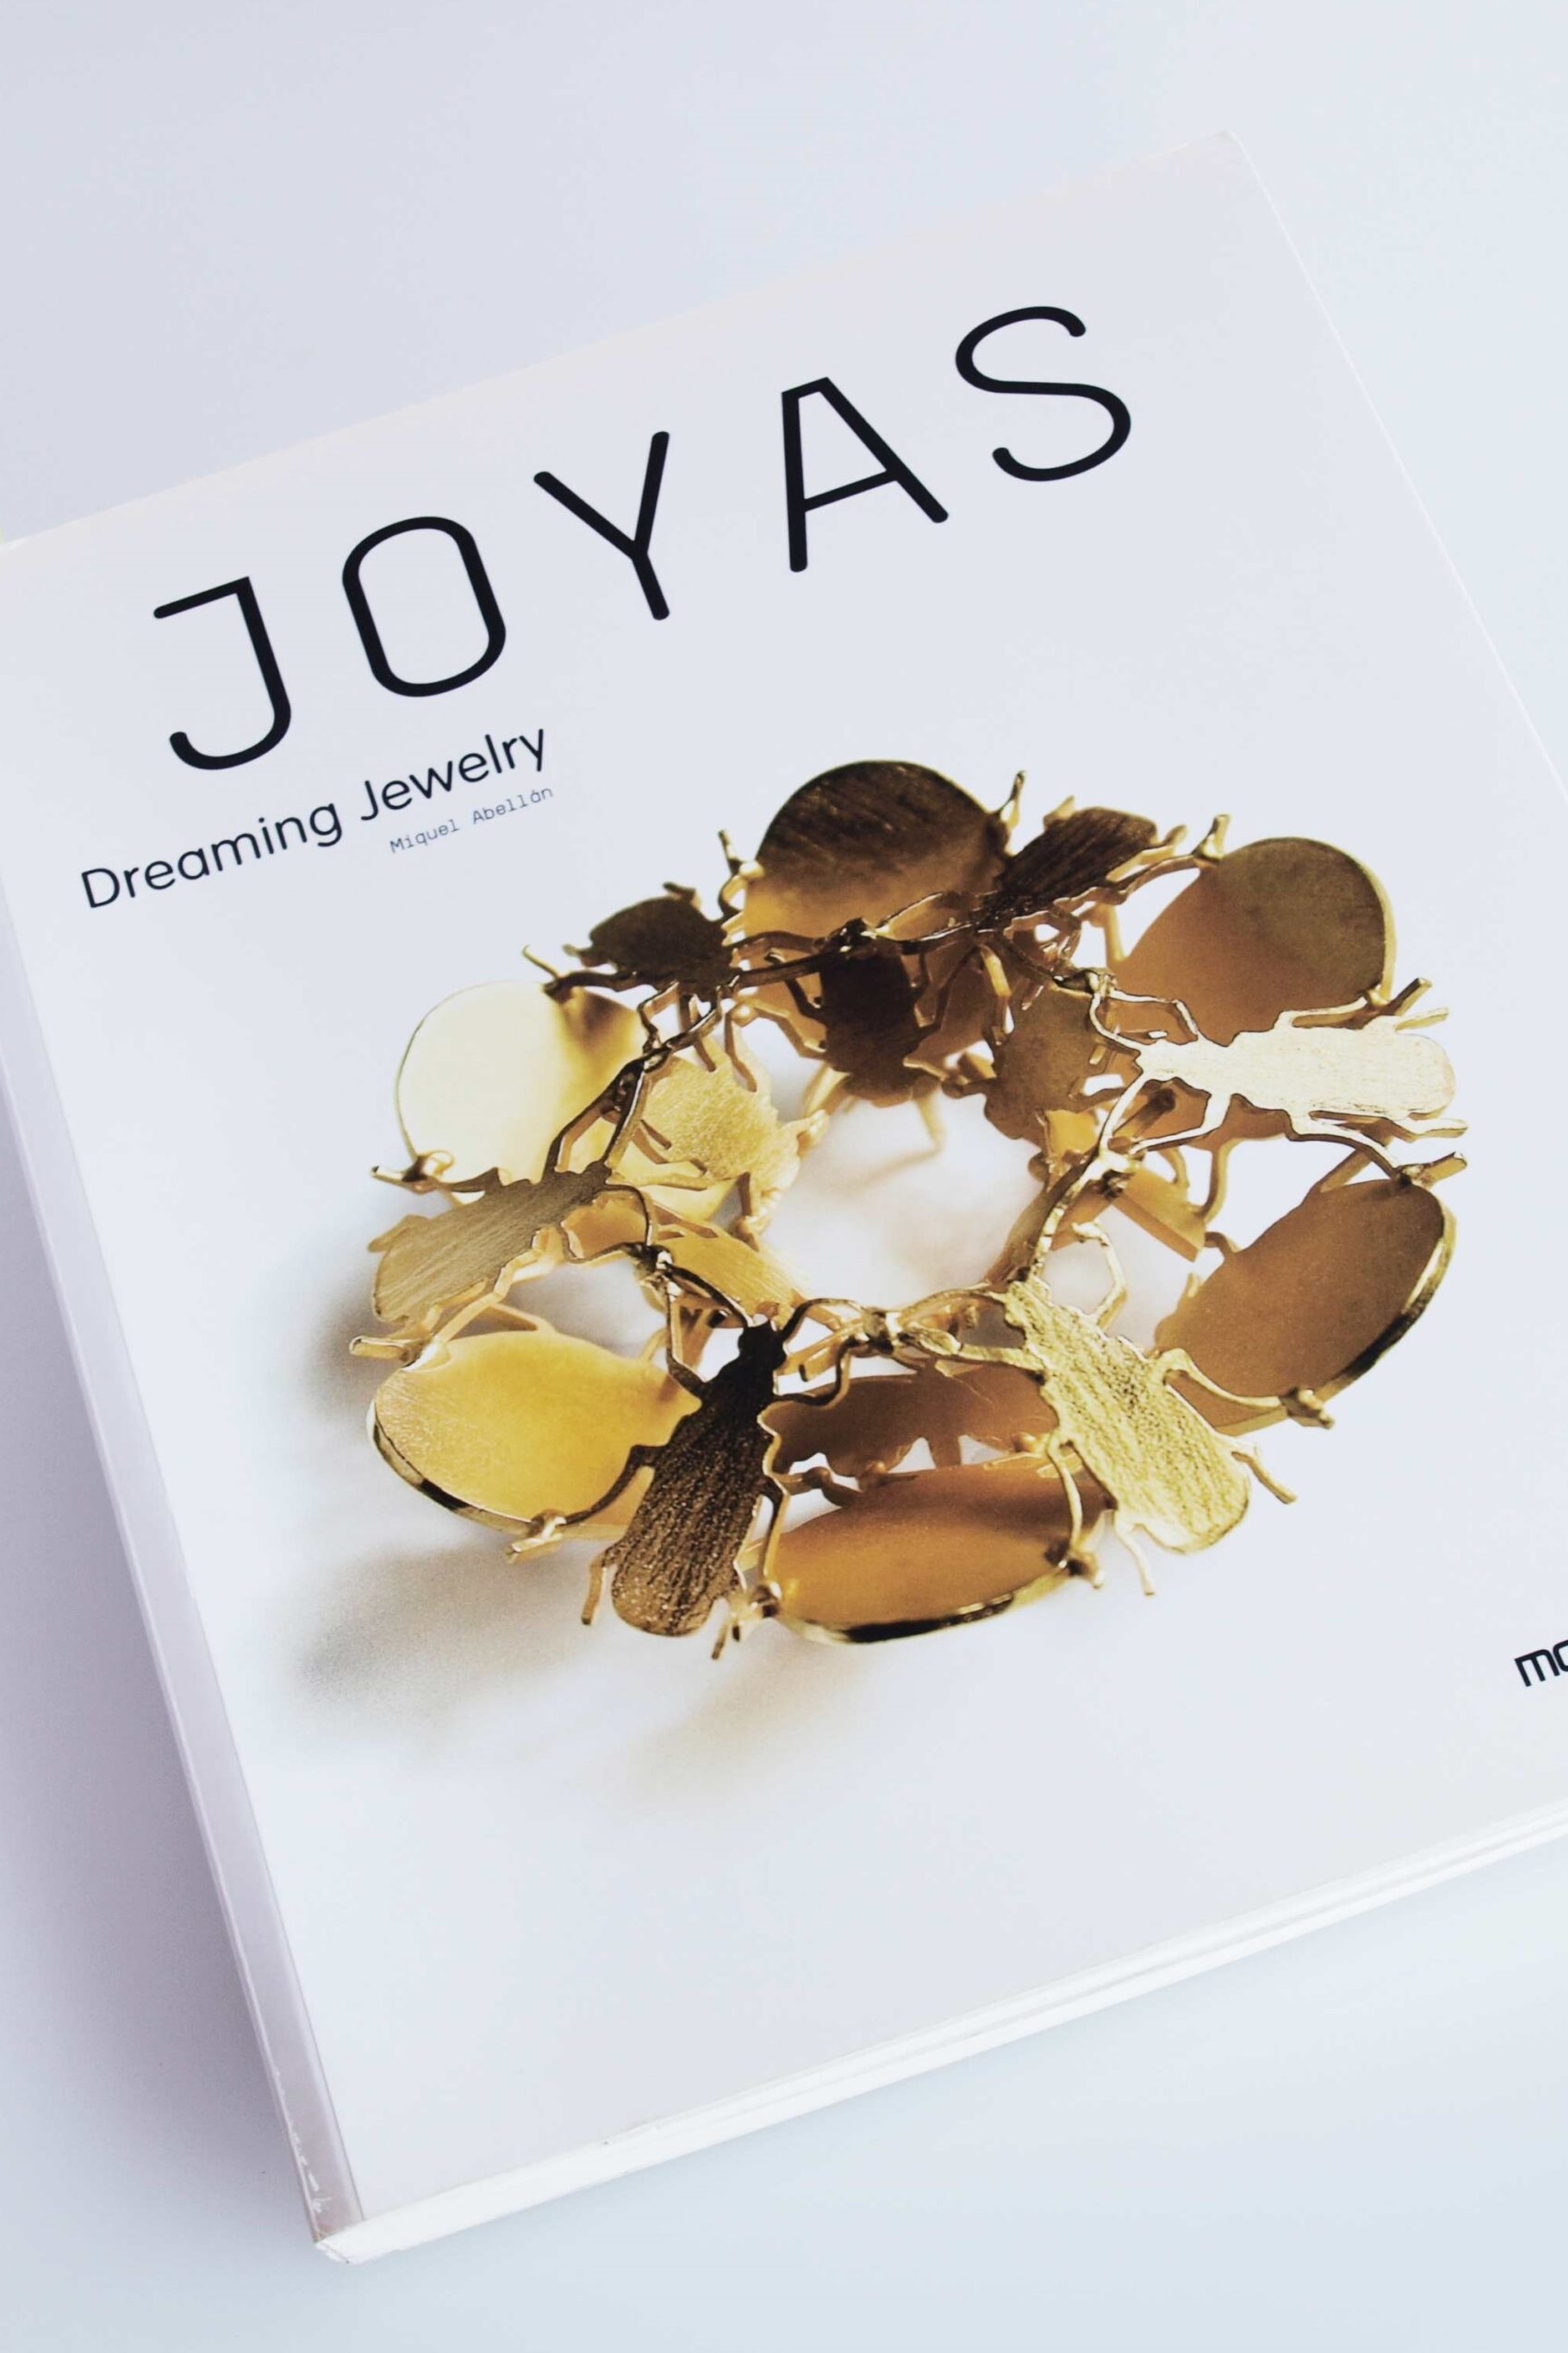 Dreaming-jewellry-libro-joyeria-Marina-Massone-entrevista-La-joyeria-de-autor